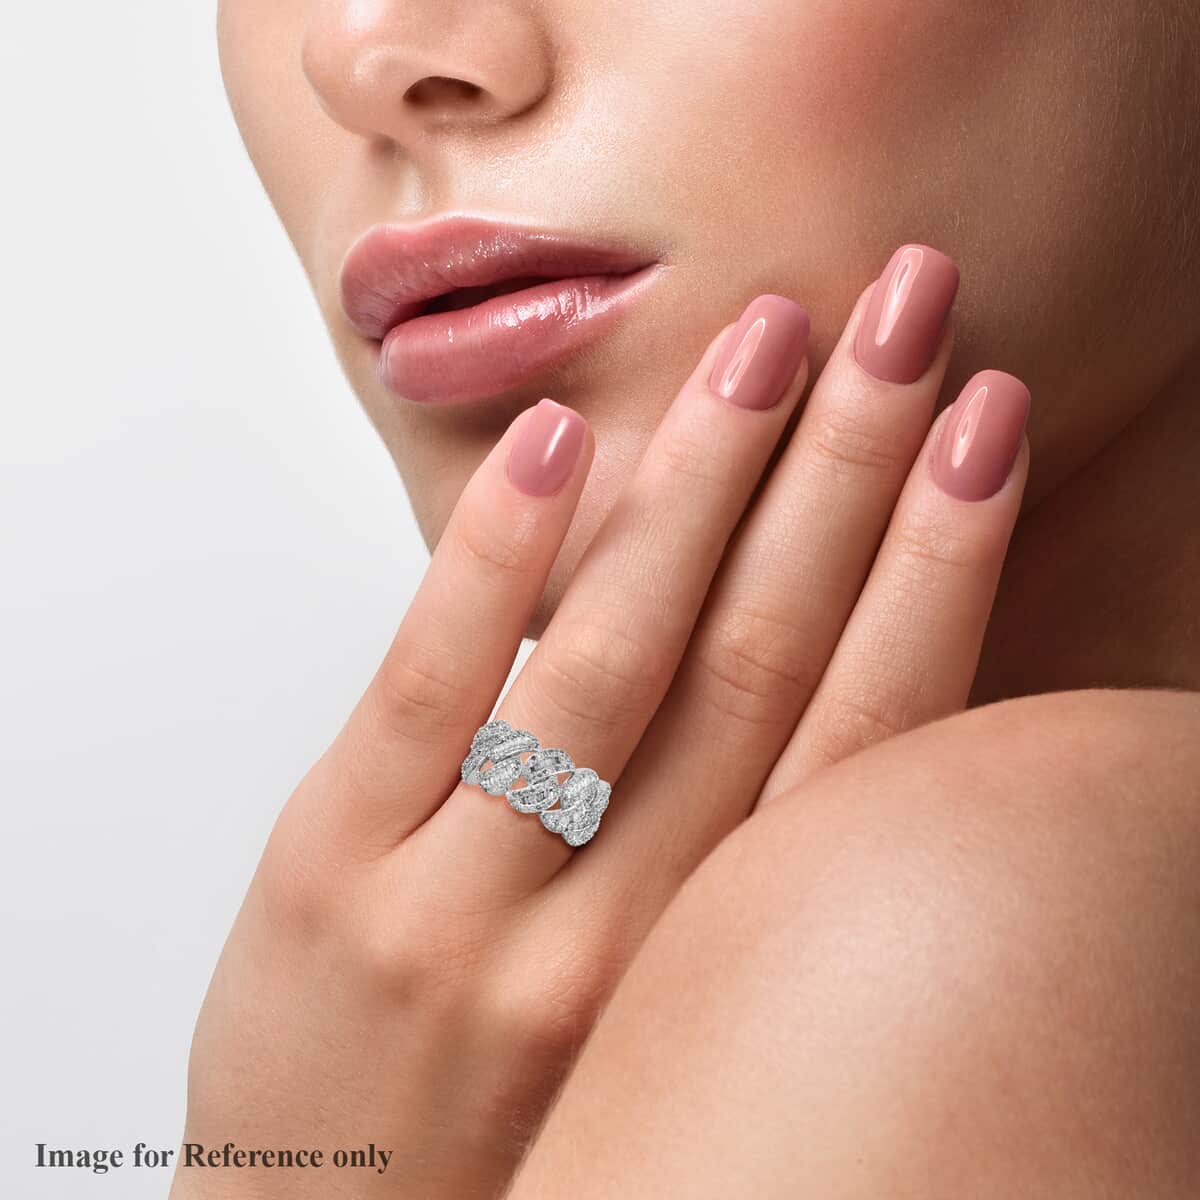 Luxoro 10K White Gold G-H I3 Diamond Fancy Ring (Size 7.0) 4.50 Grams 1.00 ctw image number 2